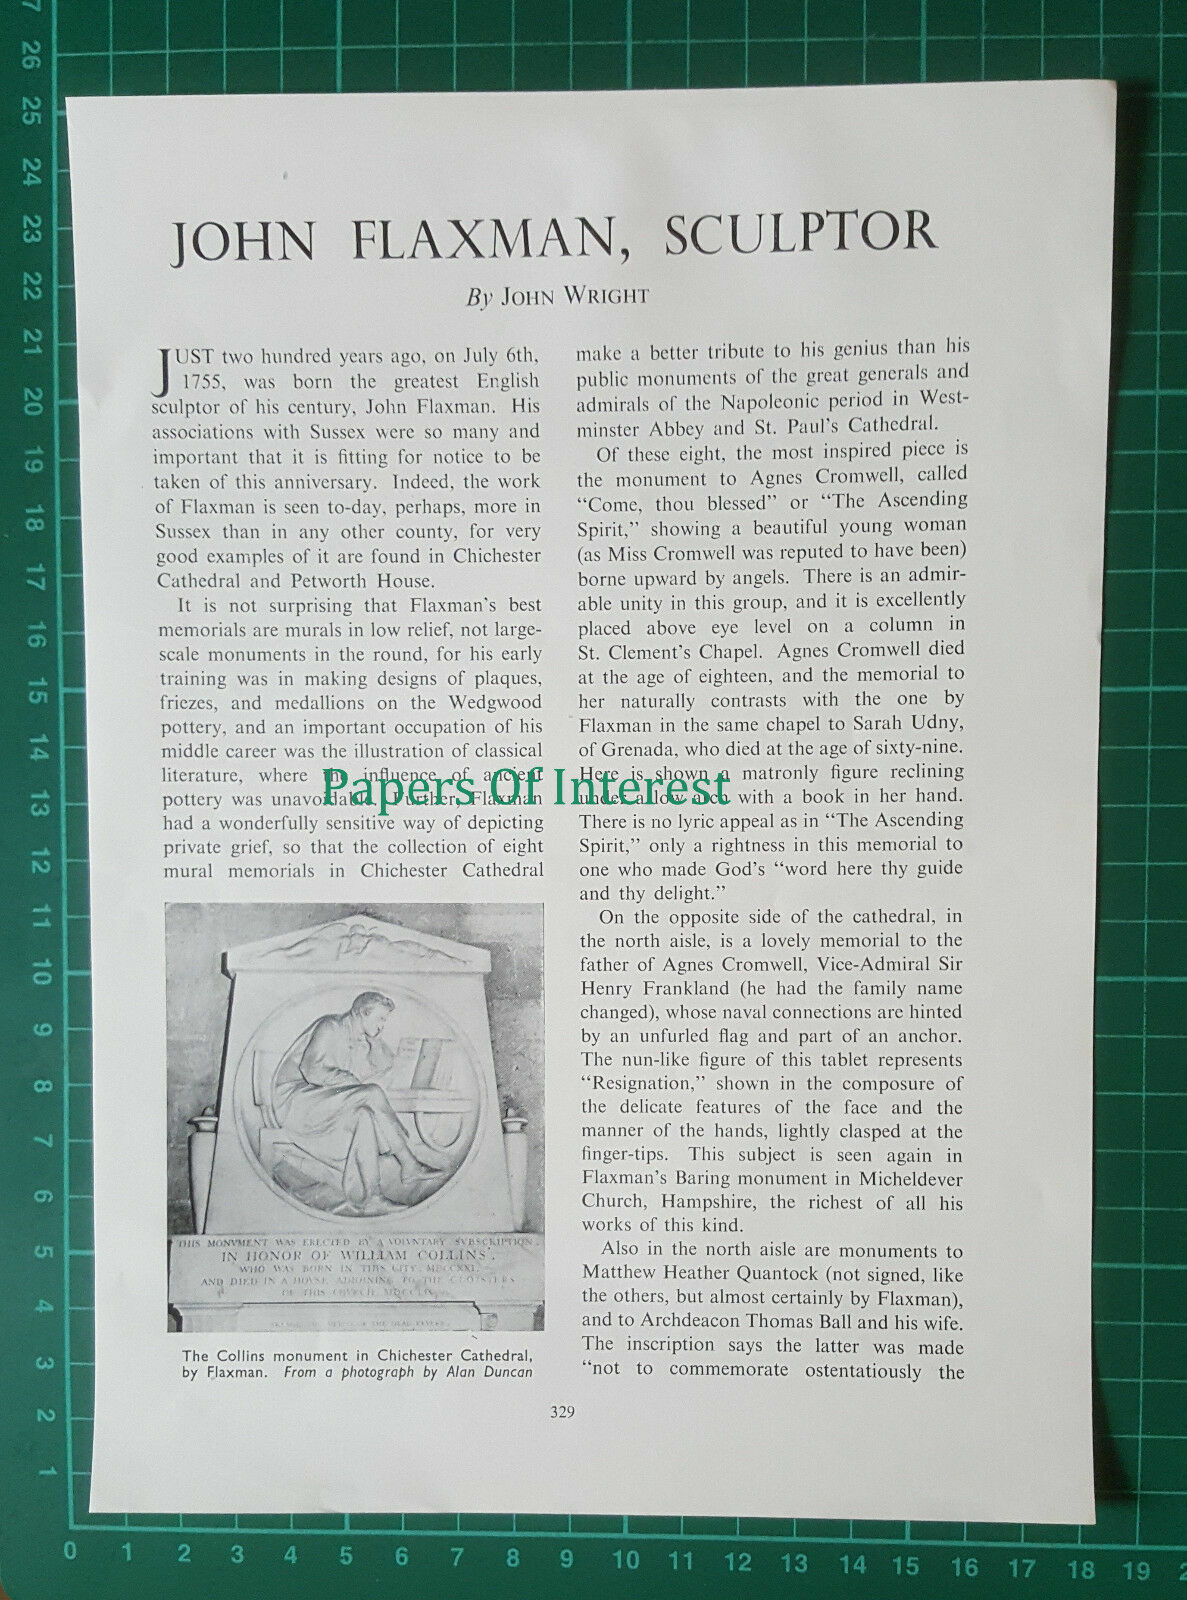 (6947) John Flaxman Sculptor - 1955 Article